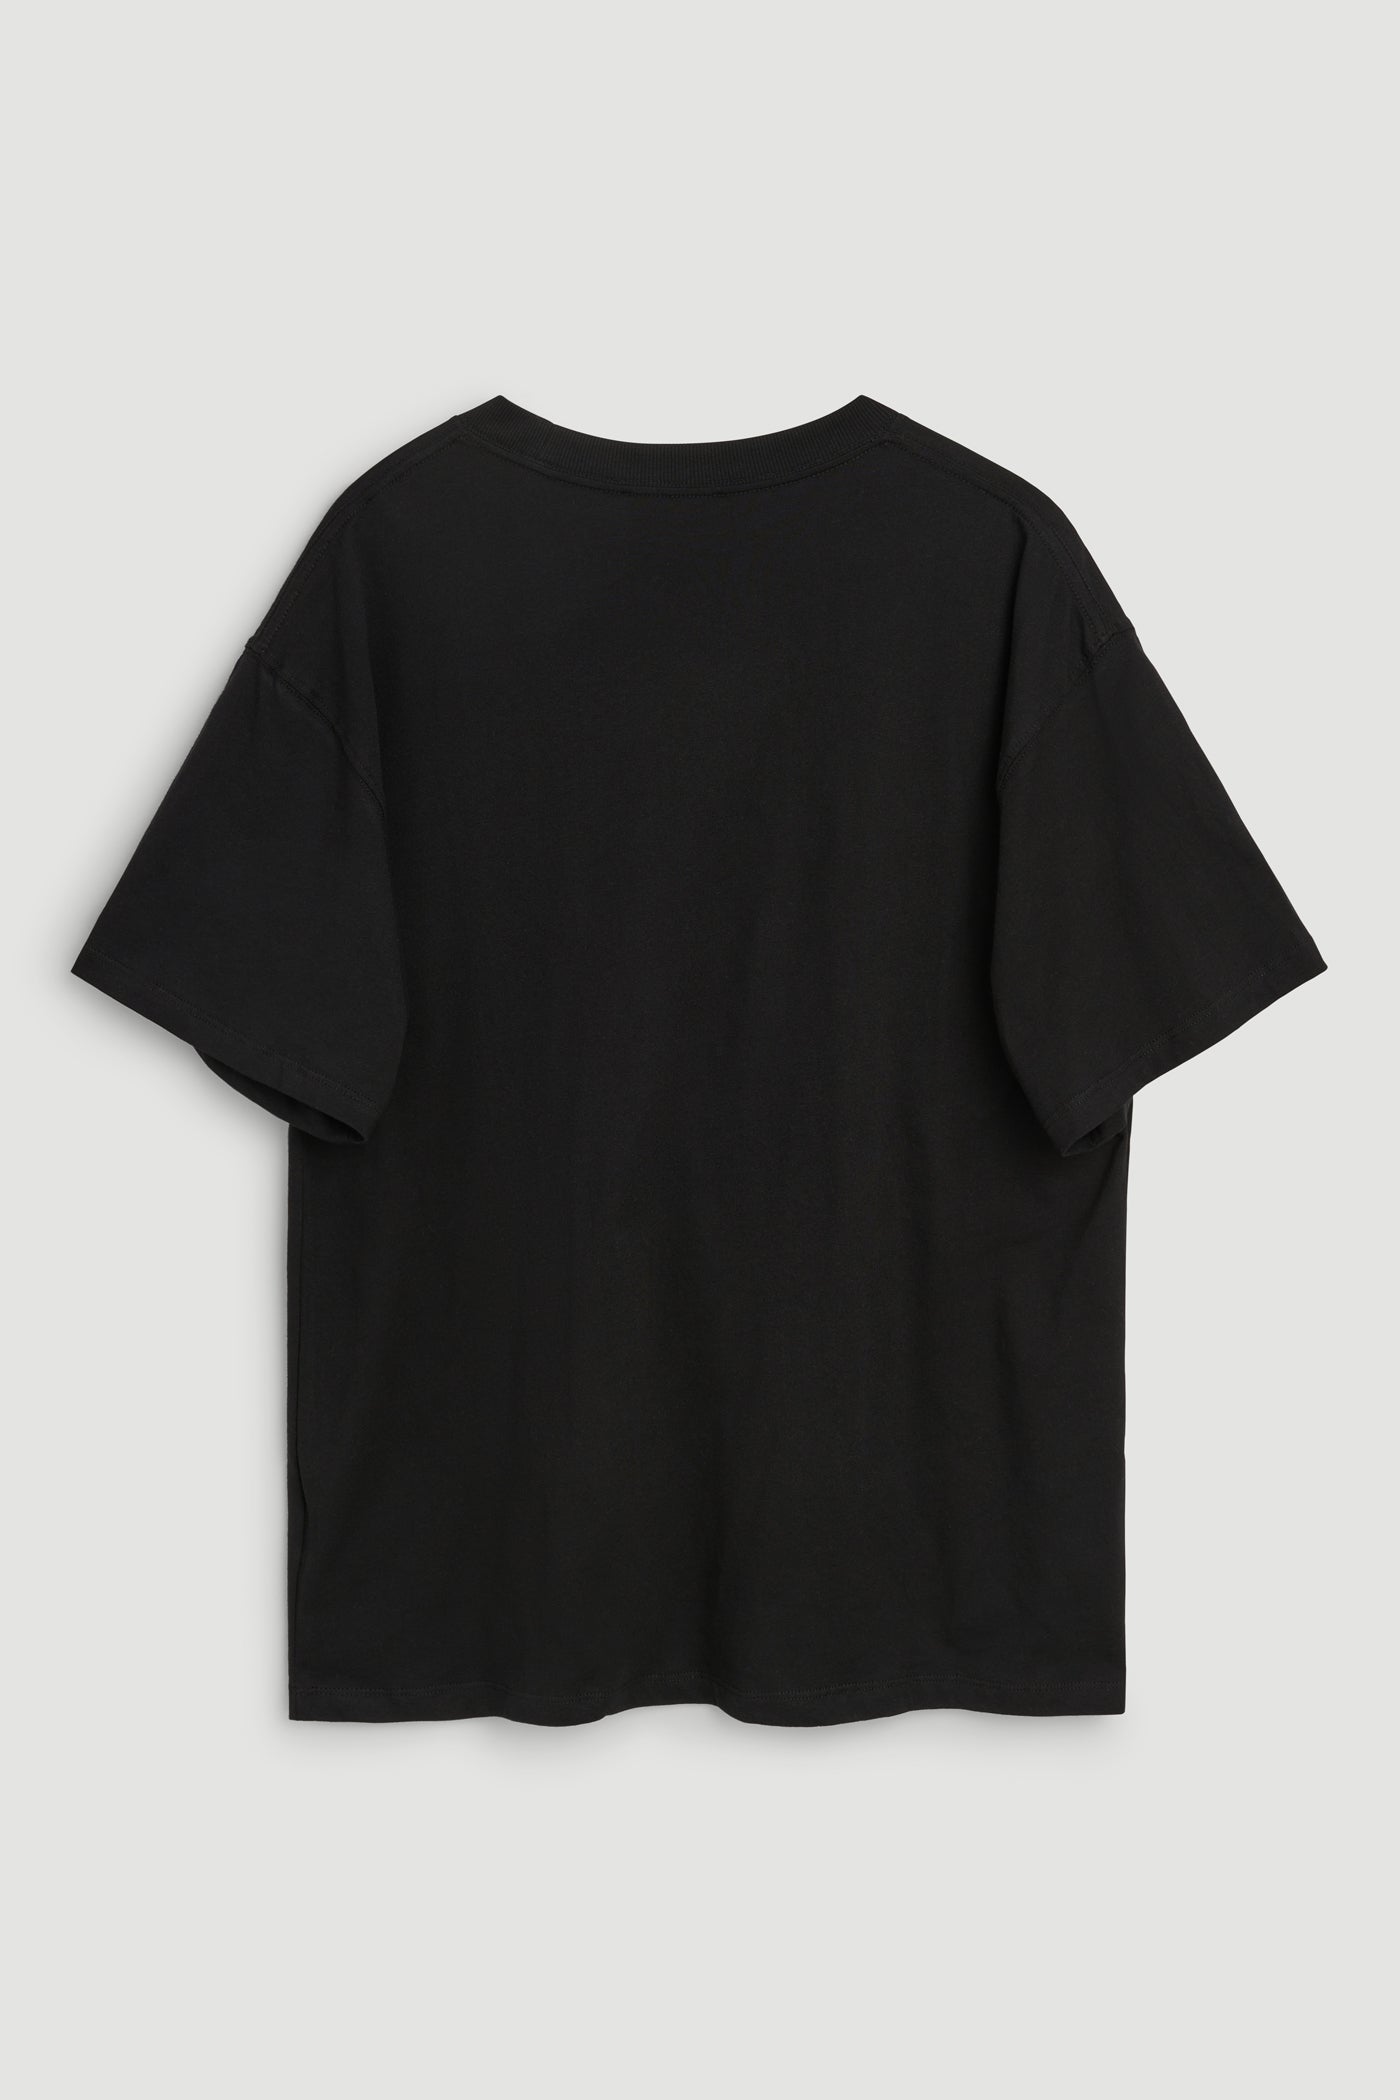 SOULLAND-OUTLET-SALE-Ash-T-shirt-Shirts-ARCHIVE-COLLECTION-4.jpg